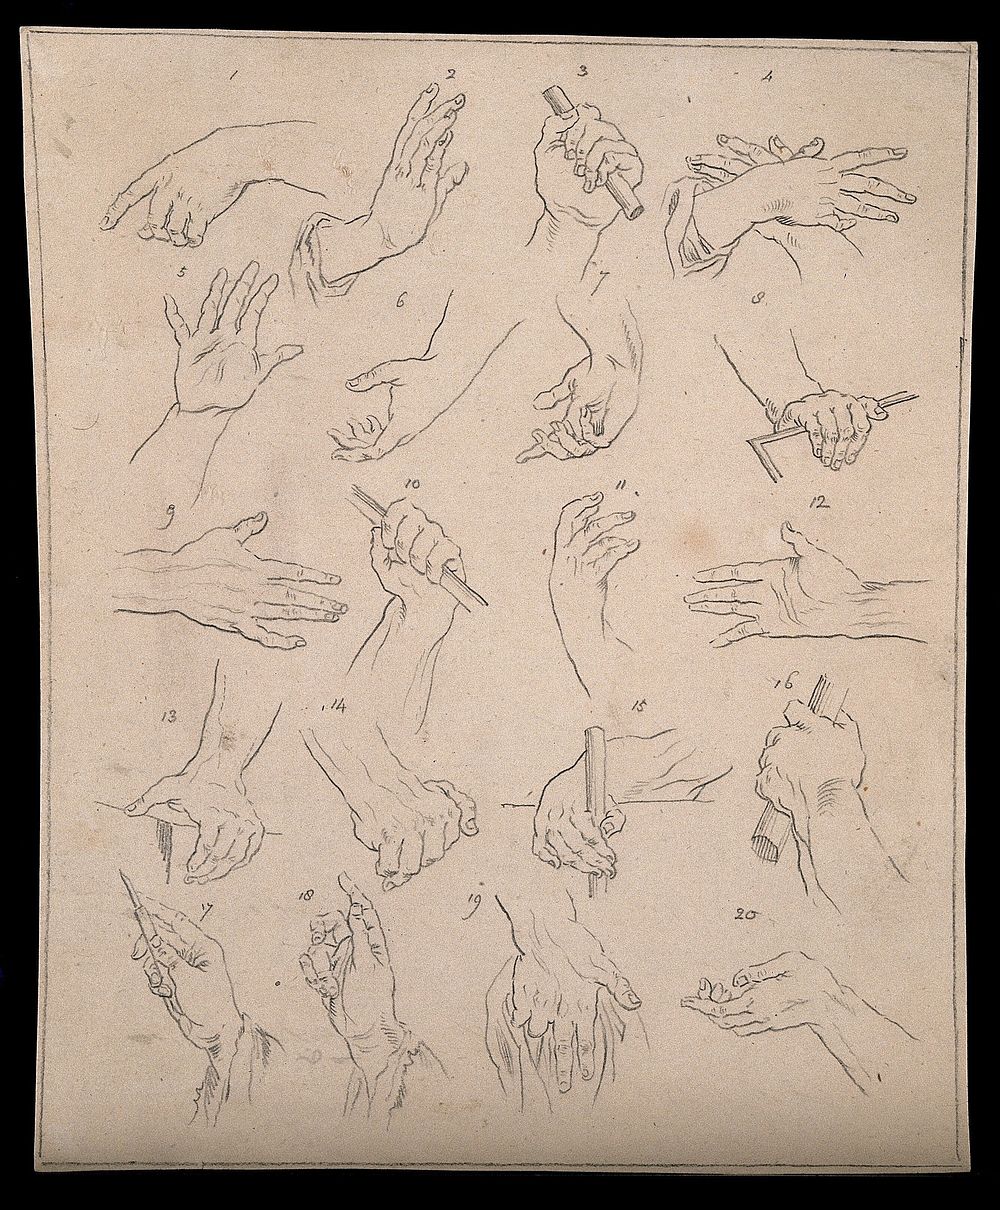 Twenty hands shown in various postures, movements and deeds. Drawing, c. 1793.